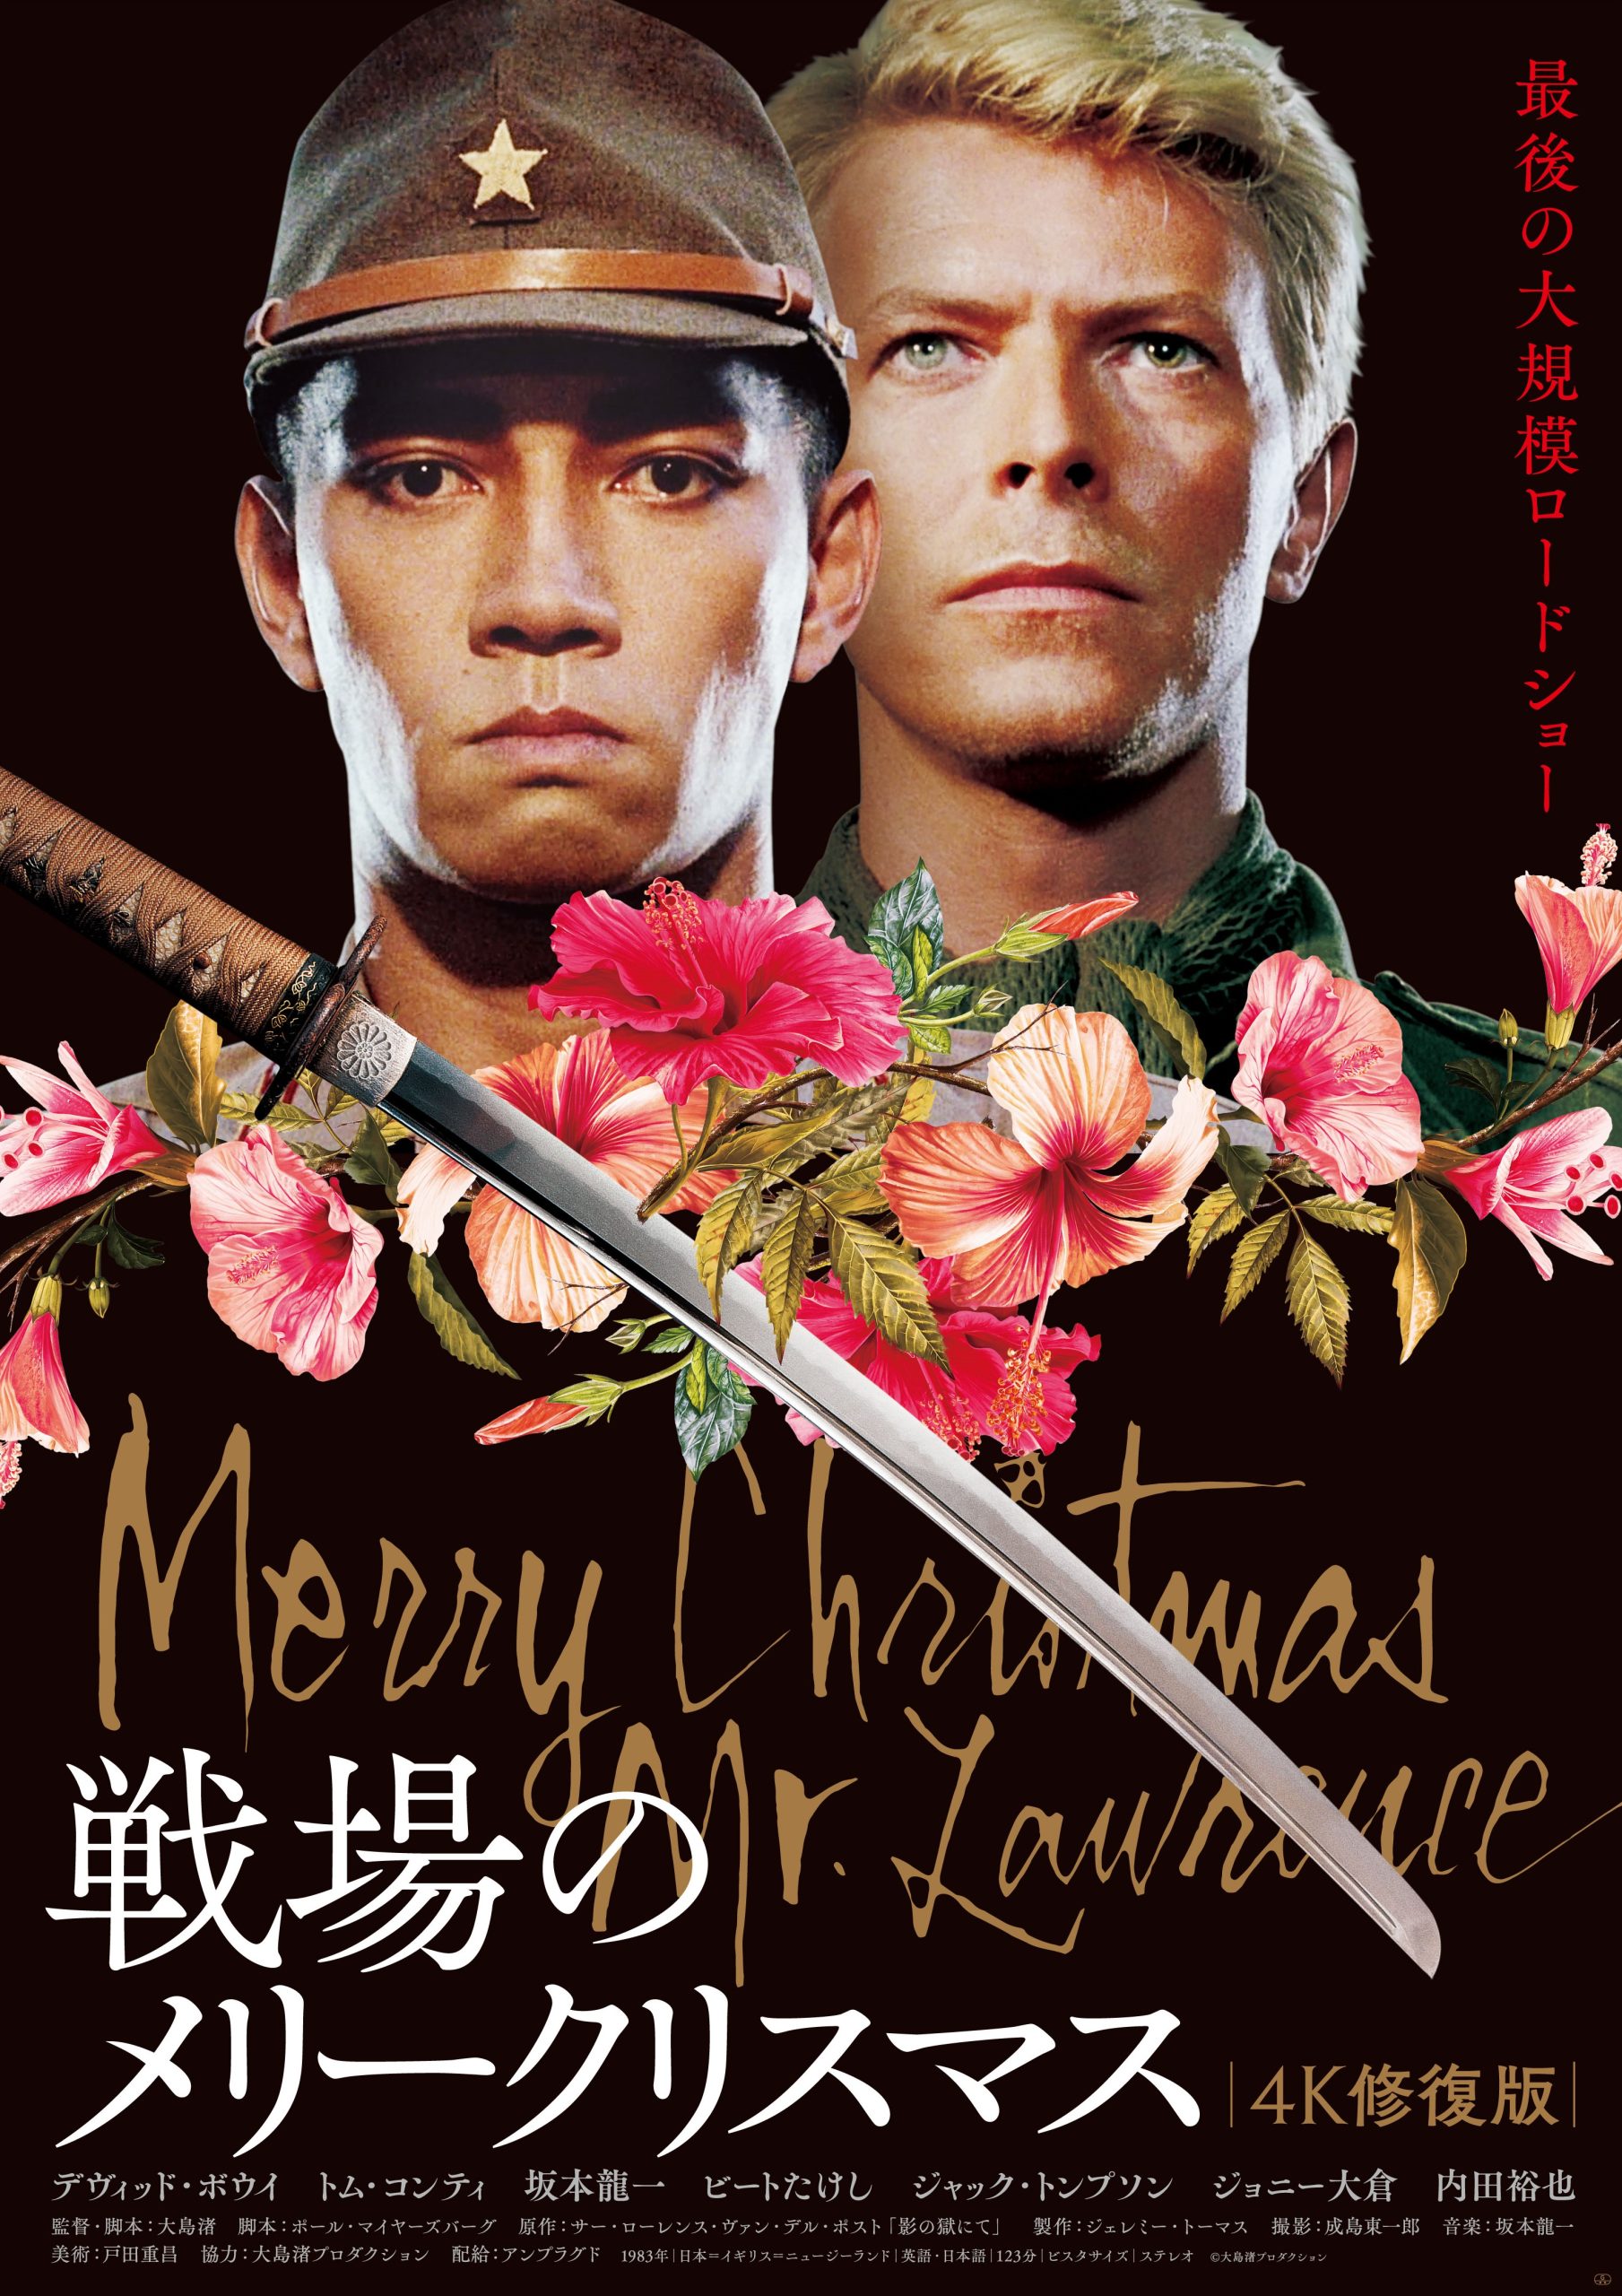 Merry Christmas Mr.Lawrence 4K restored version
©Nagisa Oshima Productions